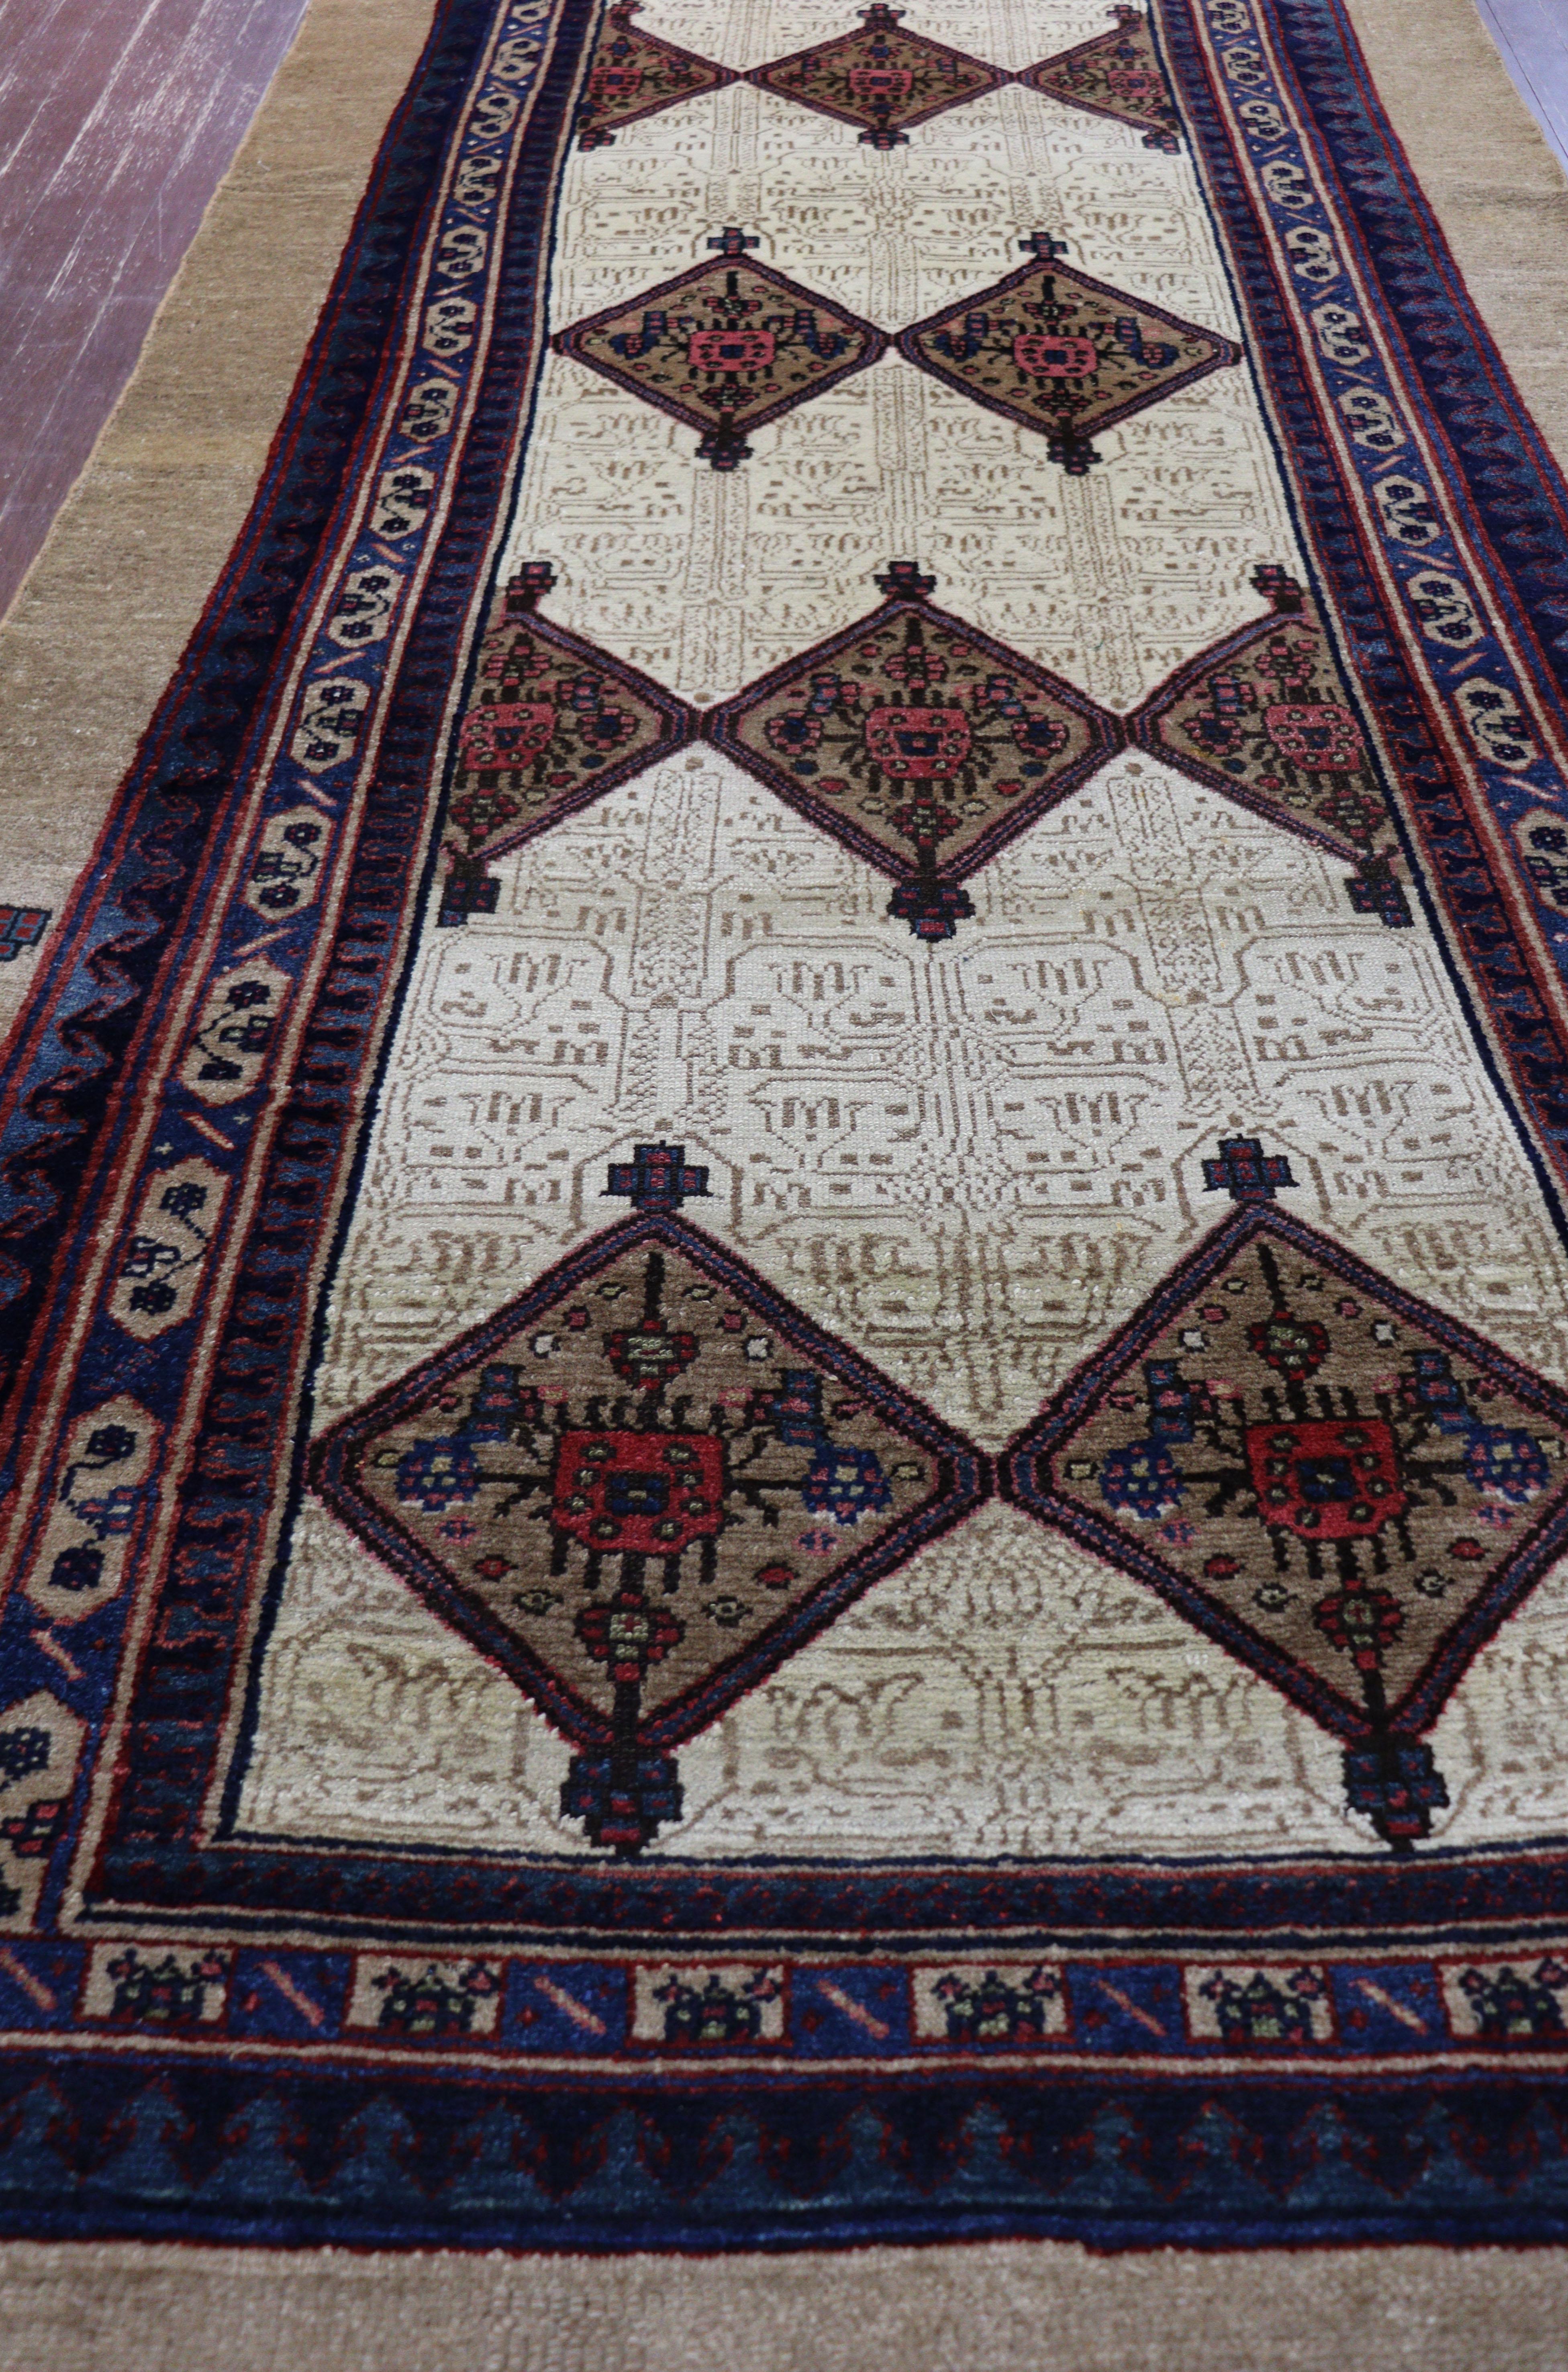 Wool Antique Persian Serab/Serapi Gallery Size Rug, Camel Color, 4'6